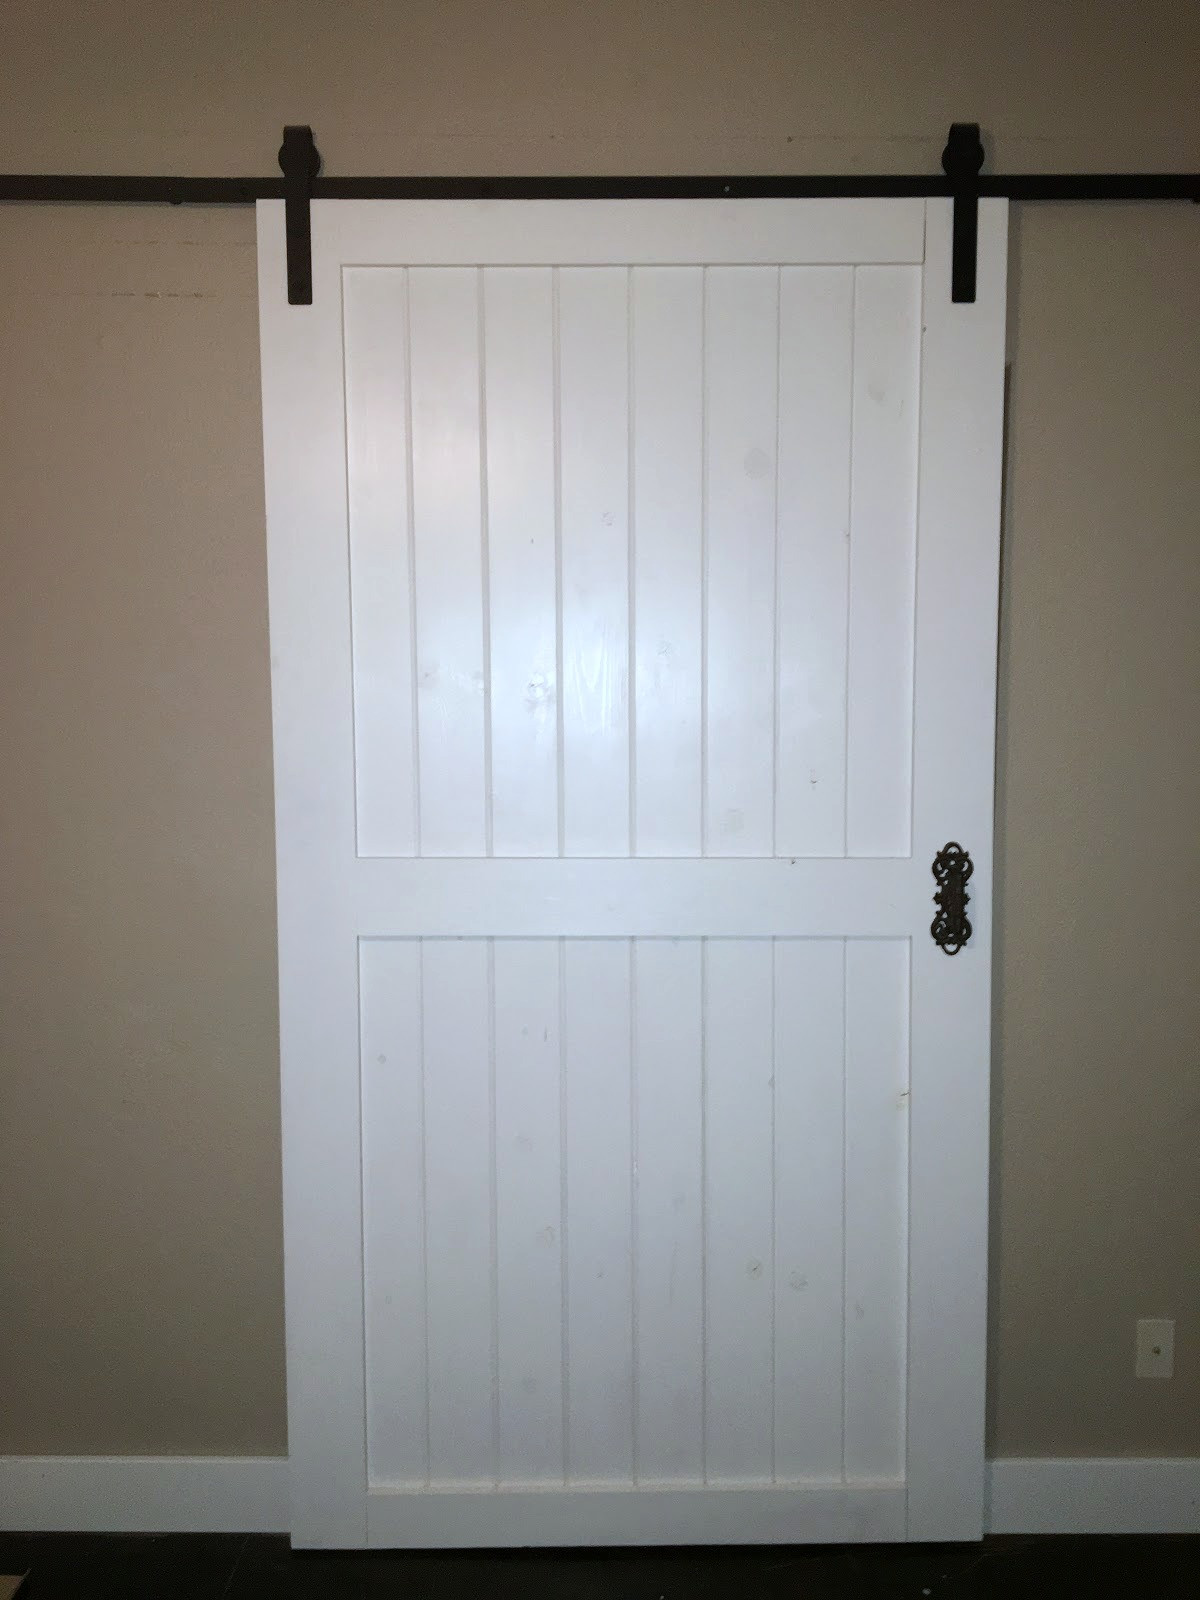 Best ideas about Barn Doors DIY
. Save or Pin Albert Blog Cheap & Easy DIY Barn Door Now.